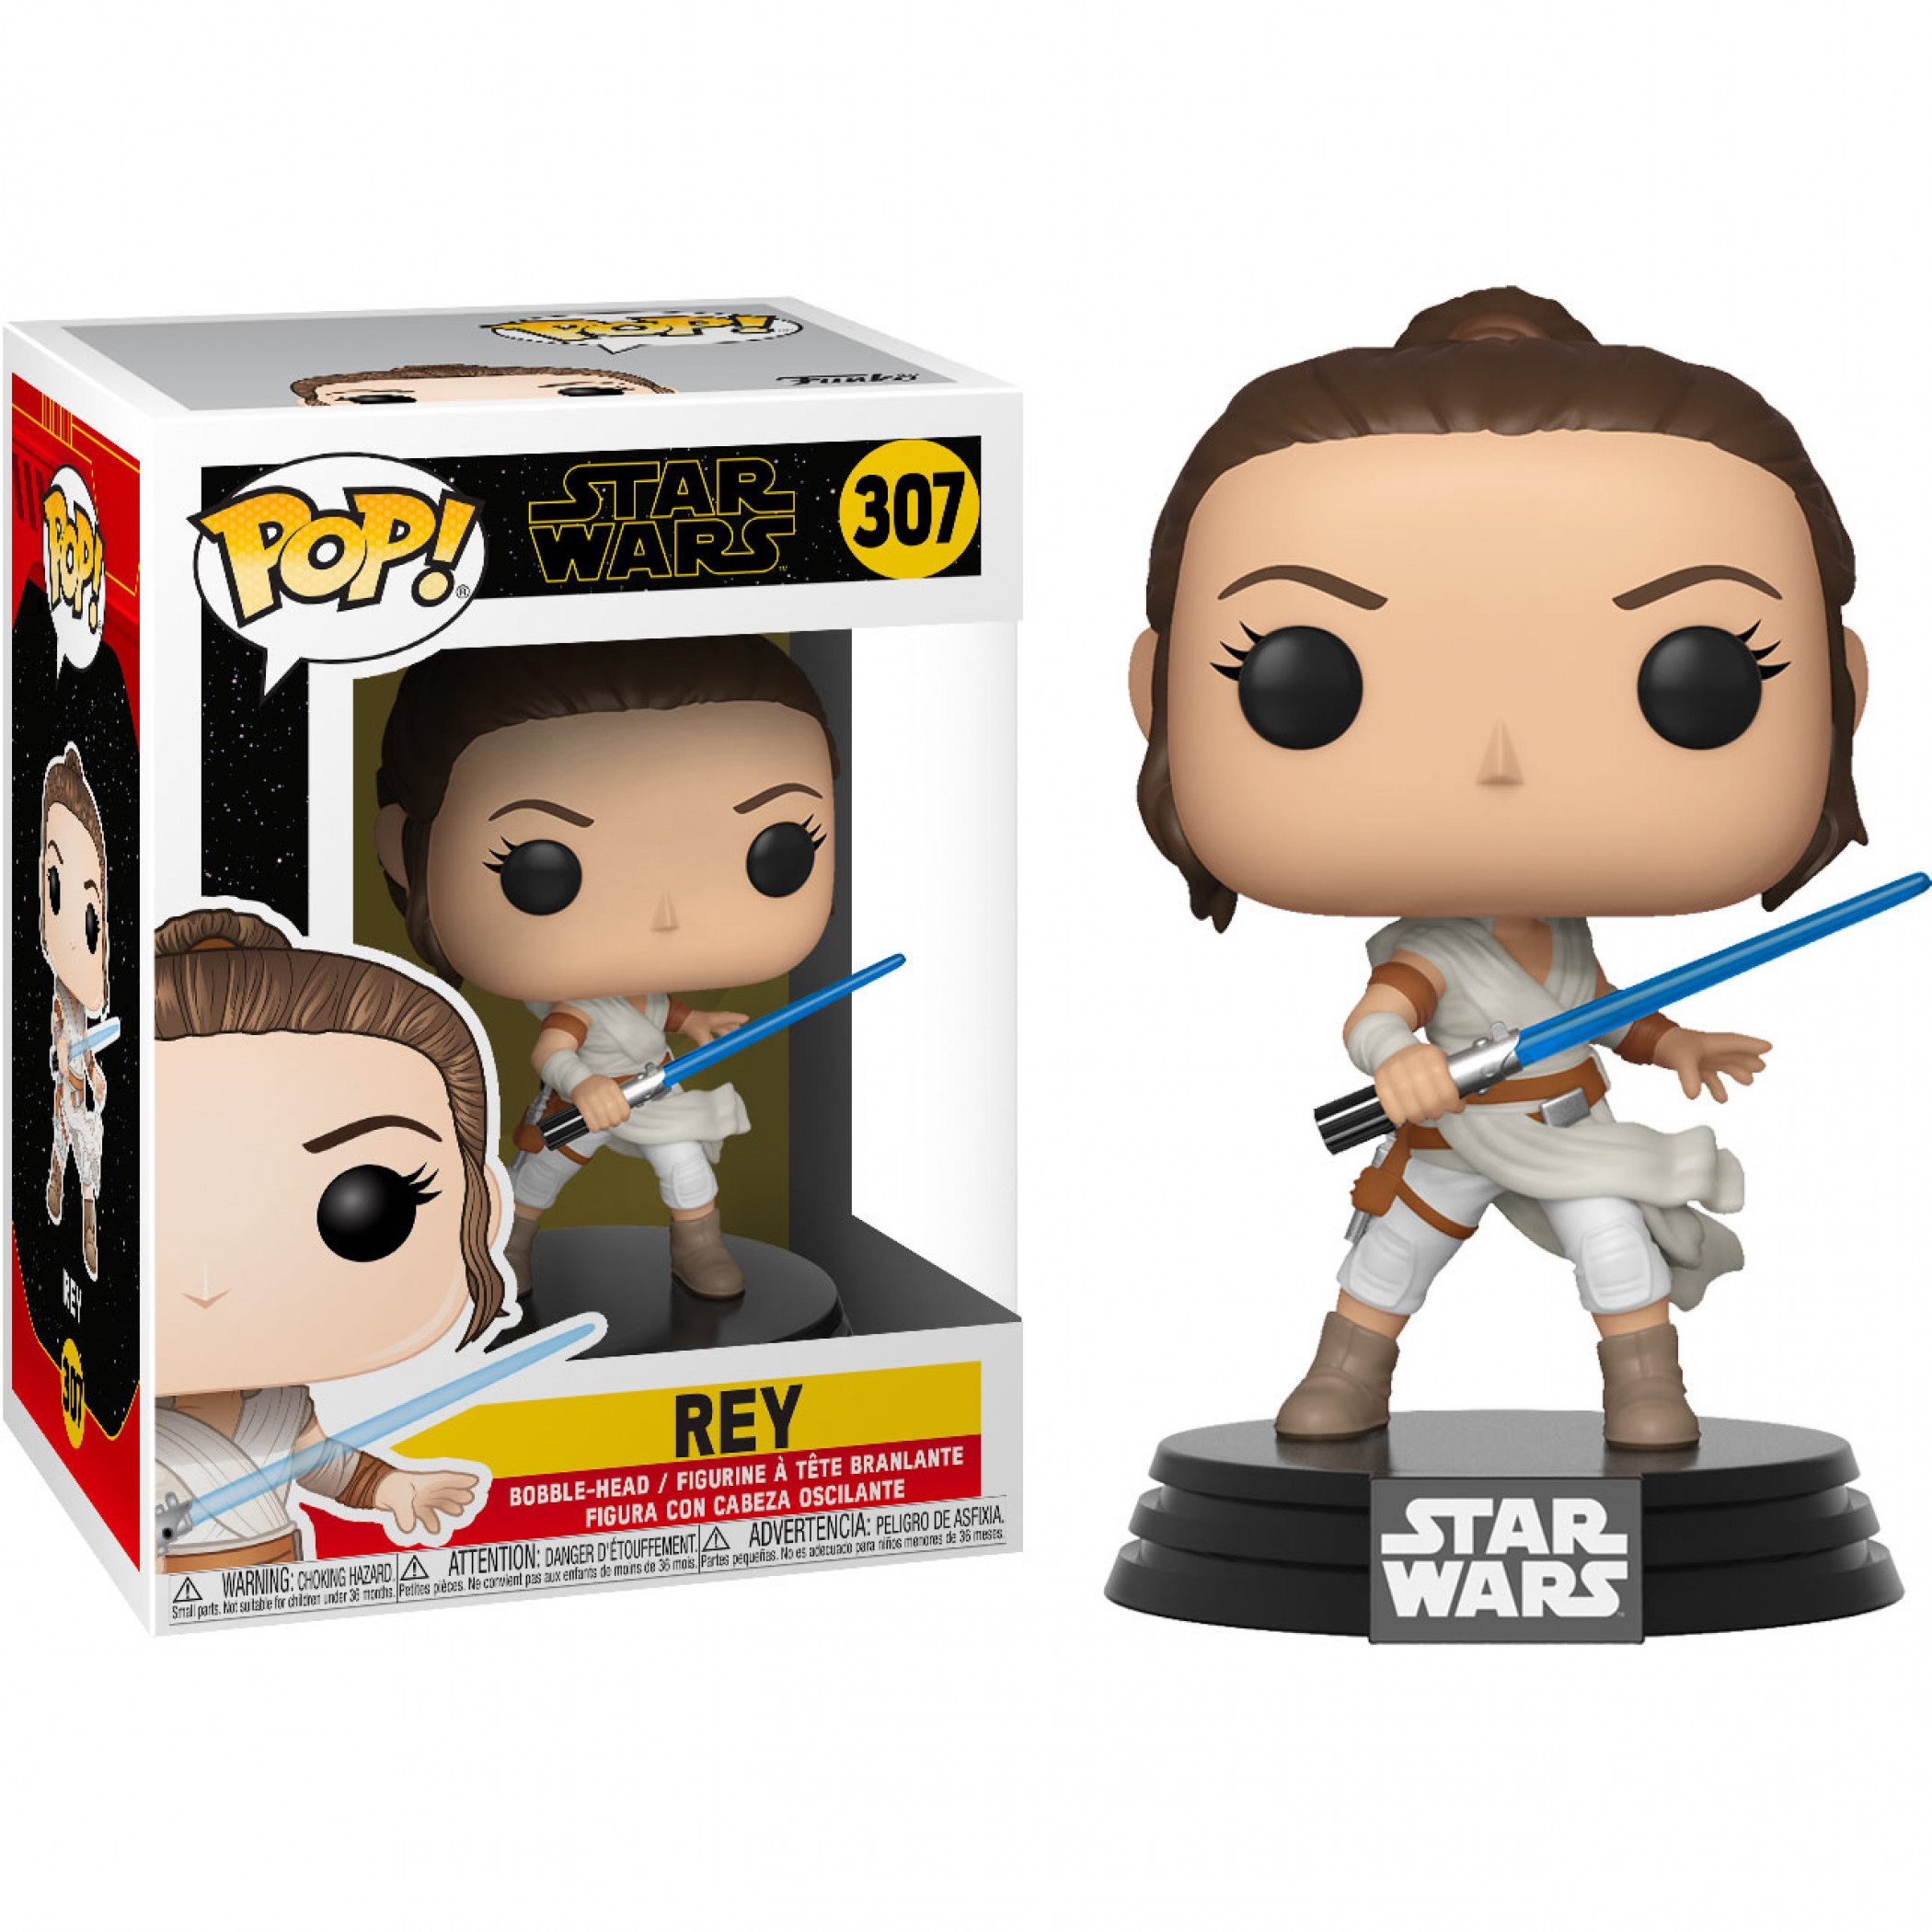 Rey - Star Wars: The Rise of Skywalker Pop!